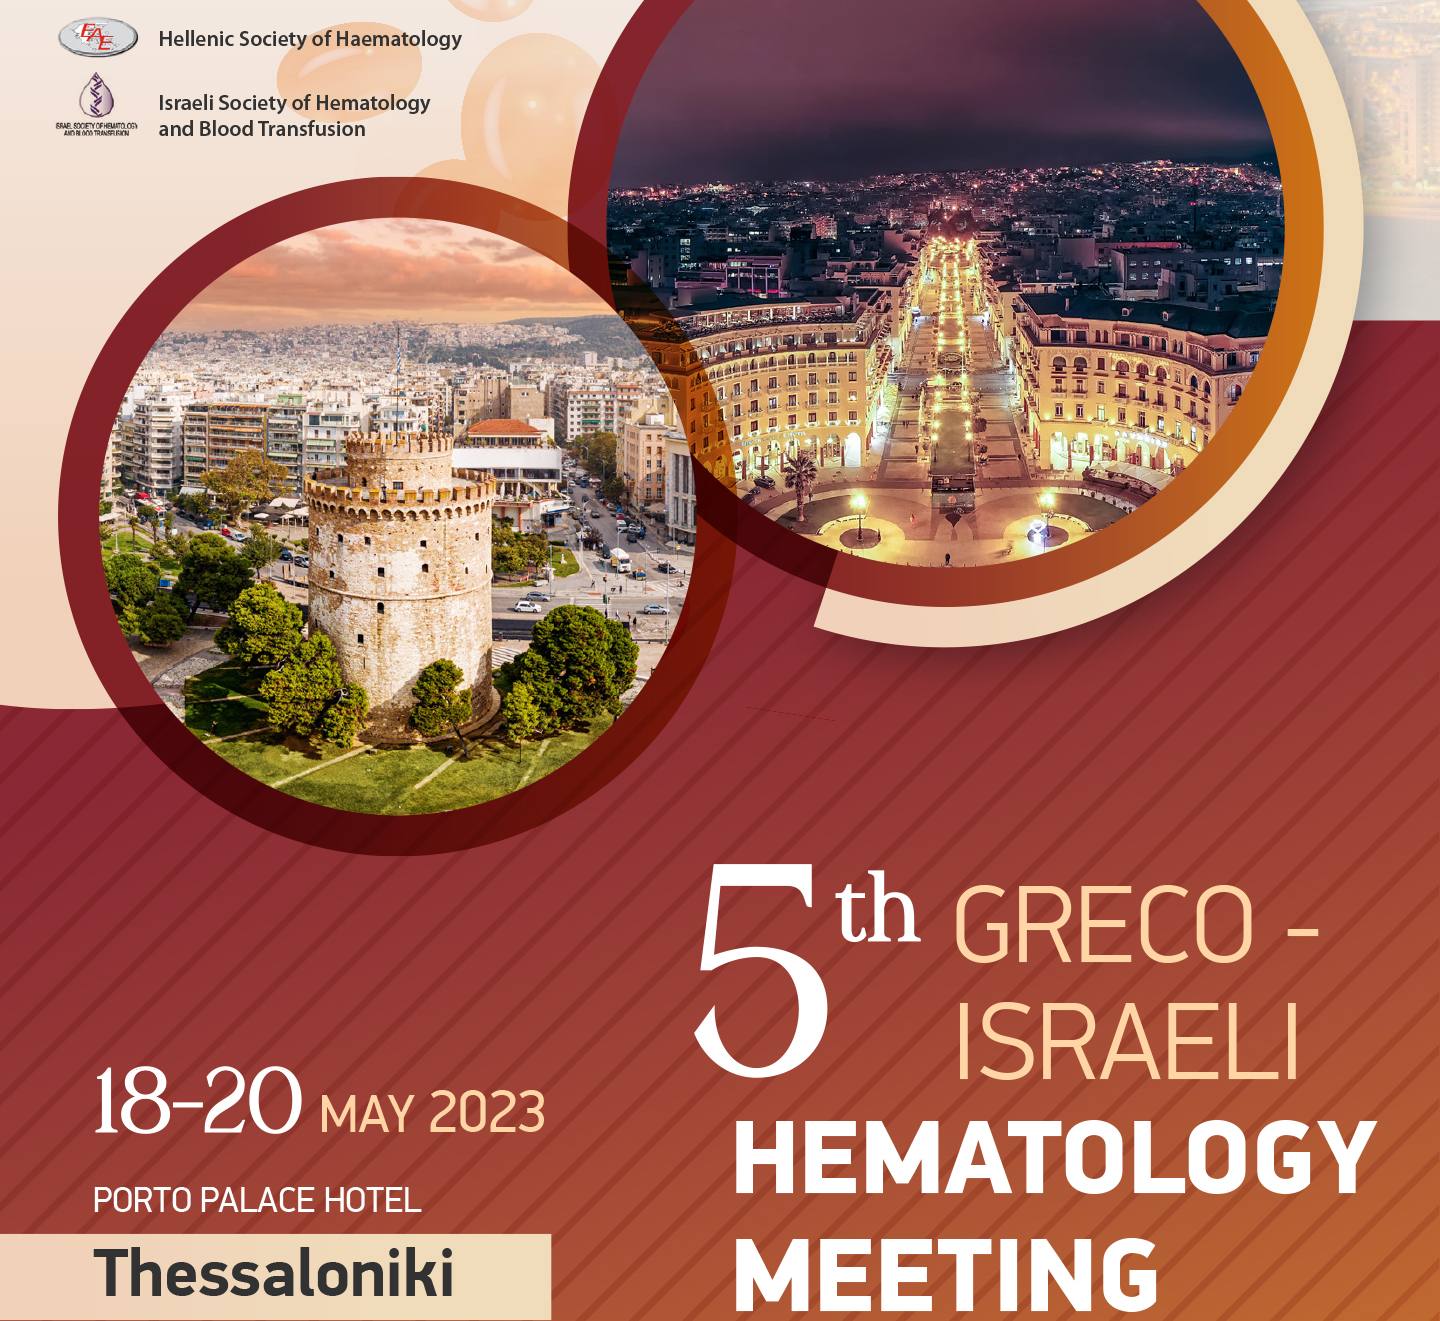 5th Greco-Israeli Hematology Meeting